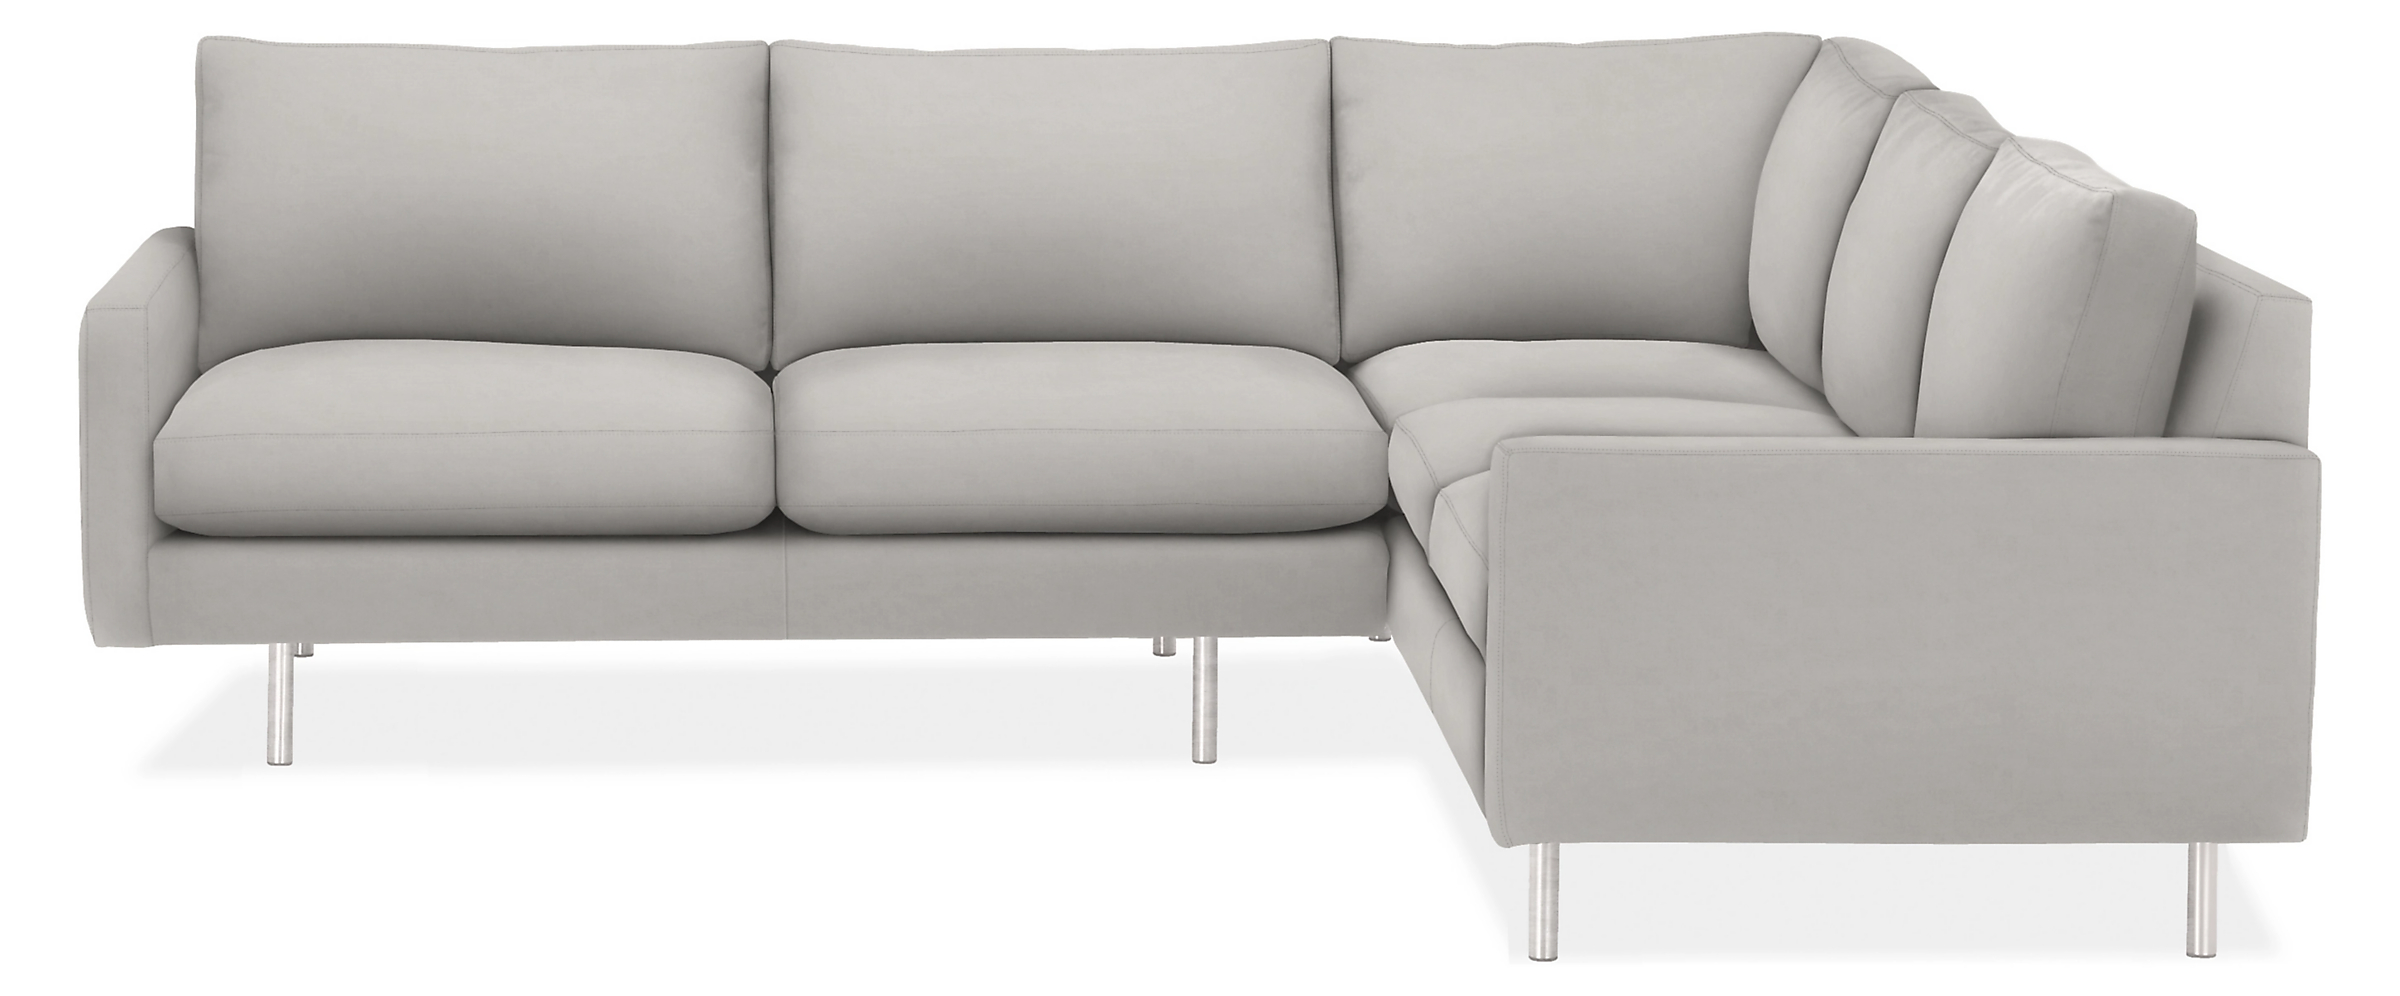 Jasper 92x91" Two-Piece w/Right-Arm Corner Sofa in View Grey with SS Legs